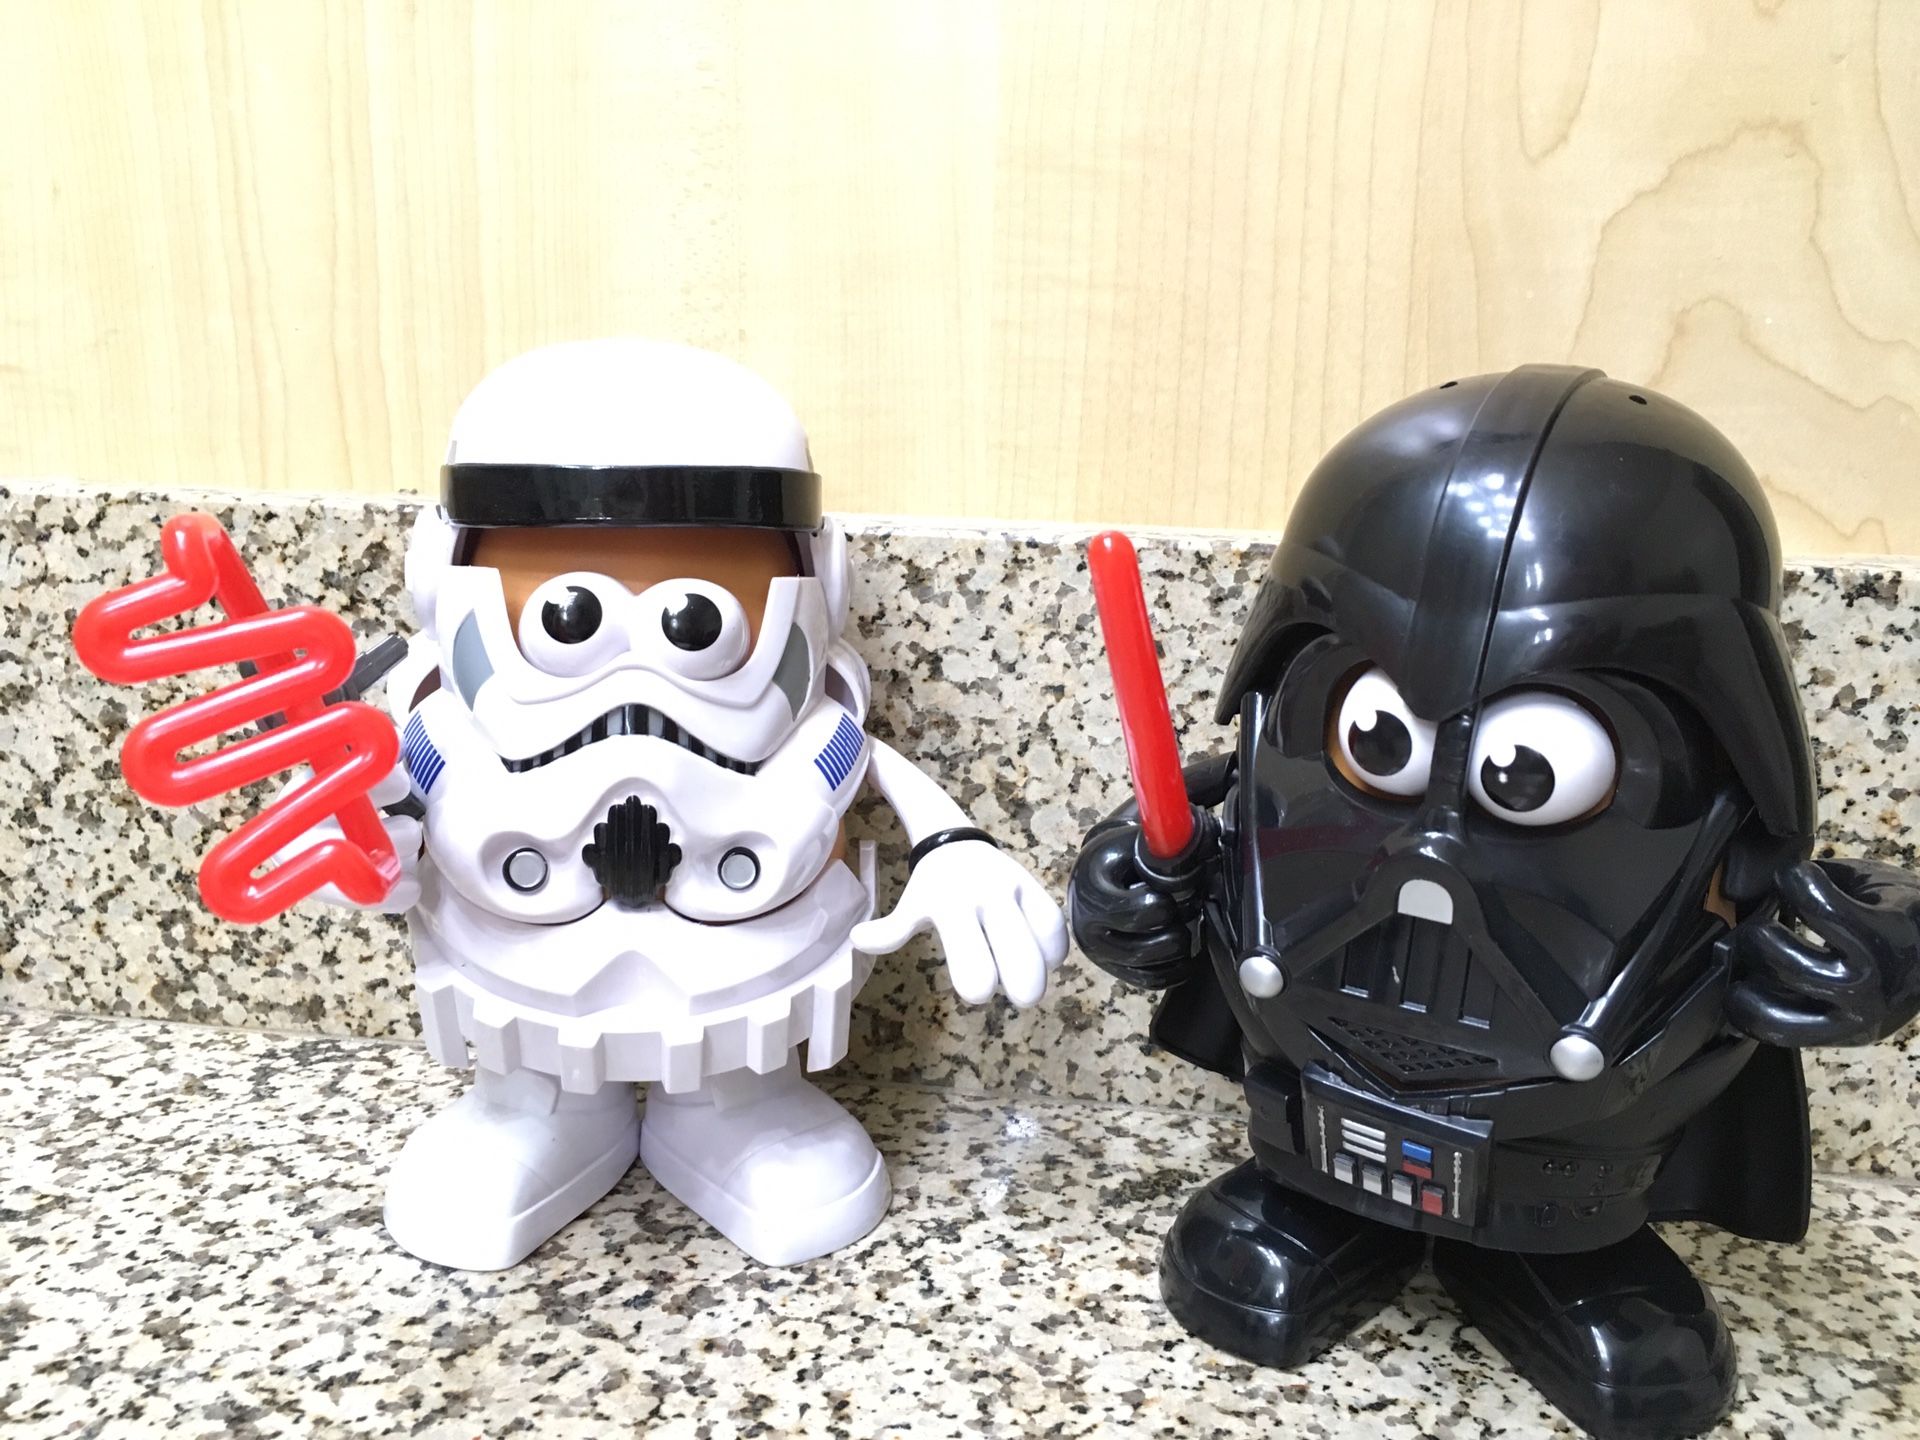 Collectable Playskool Star Wars Mr Potato Head Lot Darth Vader $42.00!!